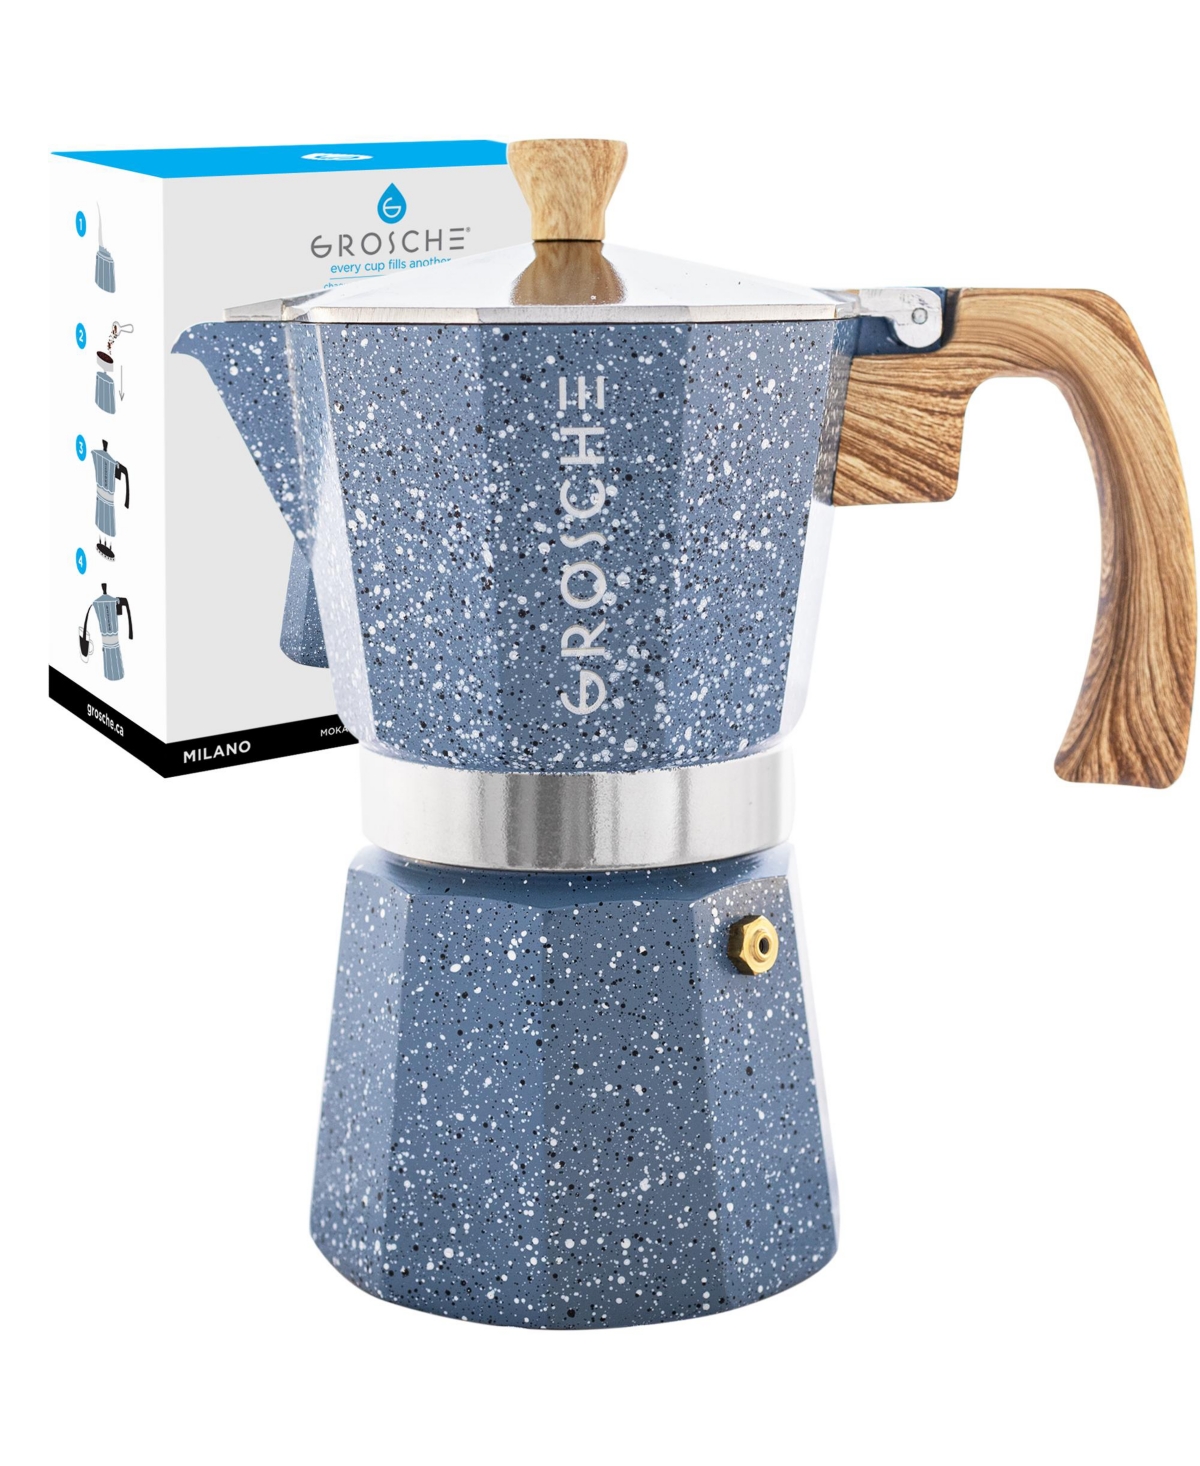 Grosche Milano Stone Stovetop Espresso Maker Moka Pot 12 Cup, 23.6 oz In Indigo Blue